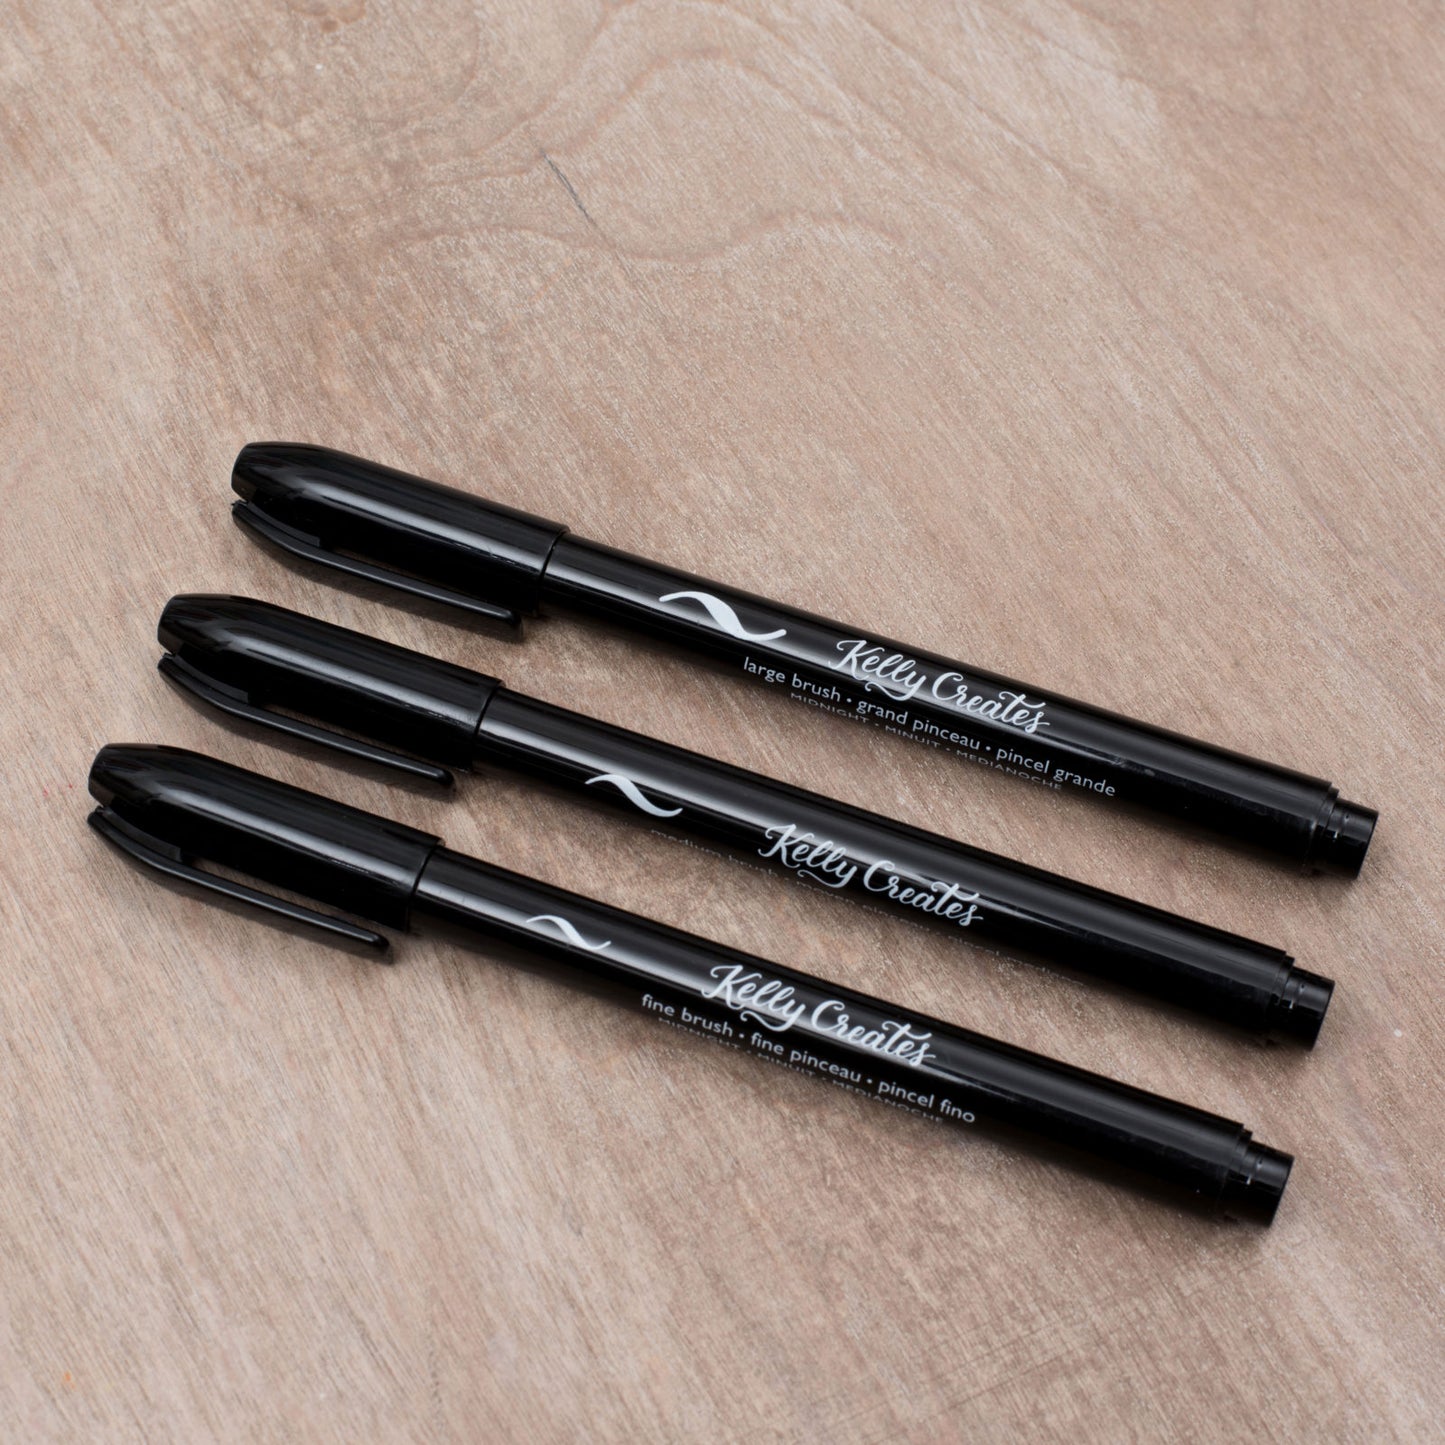 Kelly Creates Black Brush Pen Set